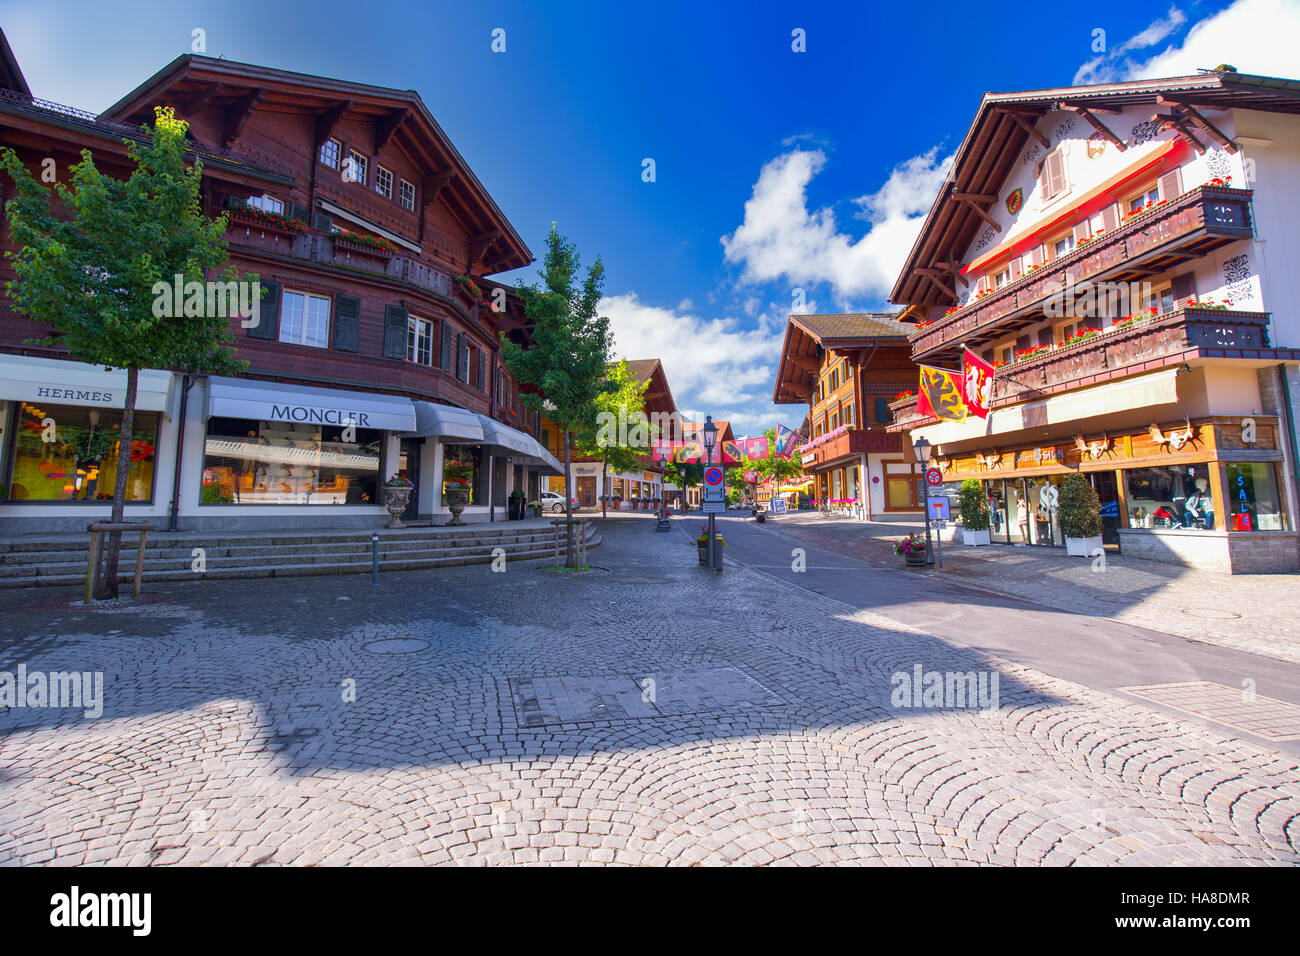 Old city center of Gstaad village - famous ski resort in Swiss Alps,  Switzerland Stock Photo - Alamy